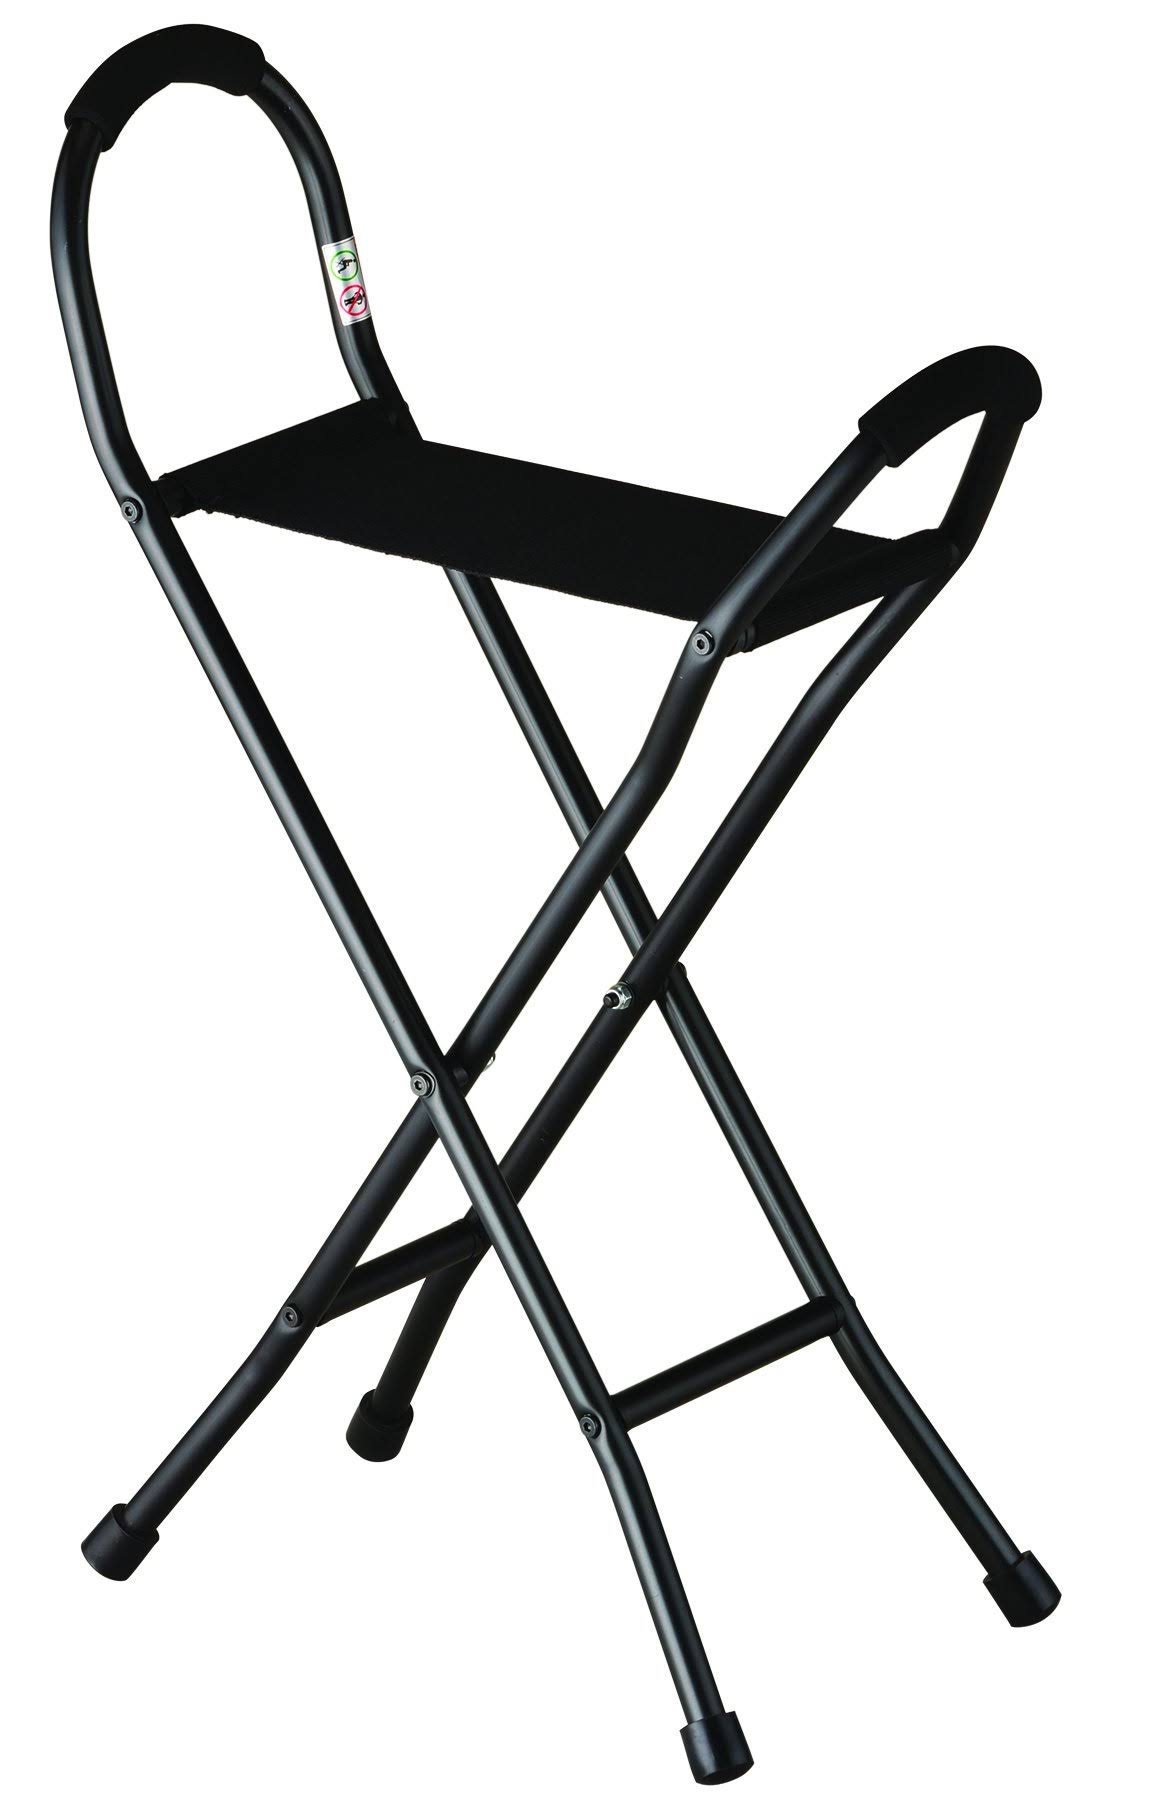 NOVA Sling Seat Folding Cane, Travel Cane with Sling Seat, Portable Sl